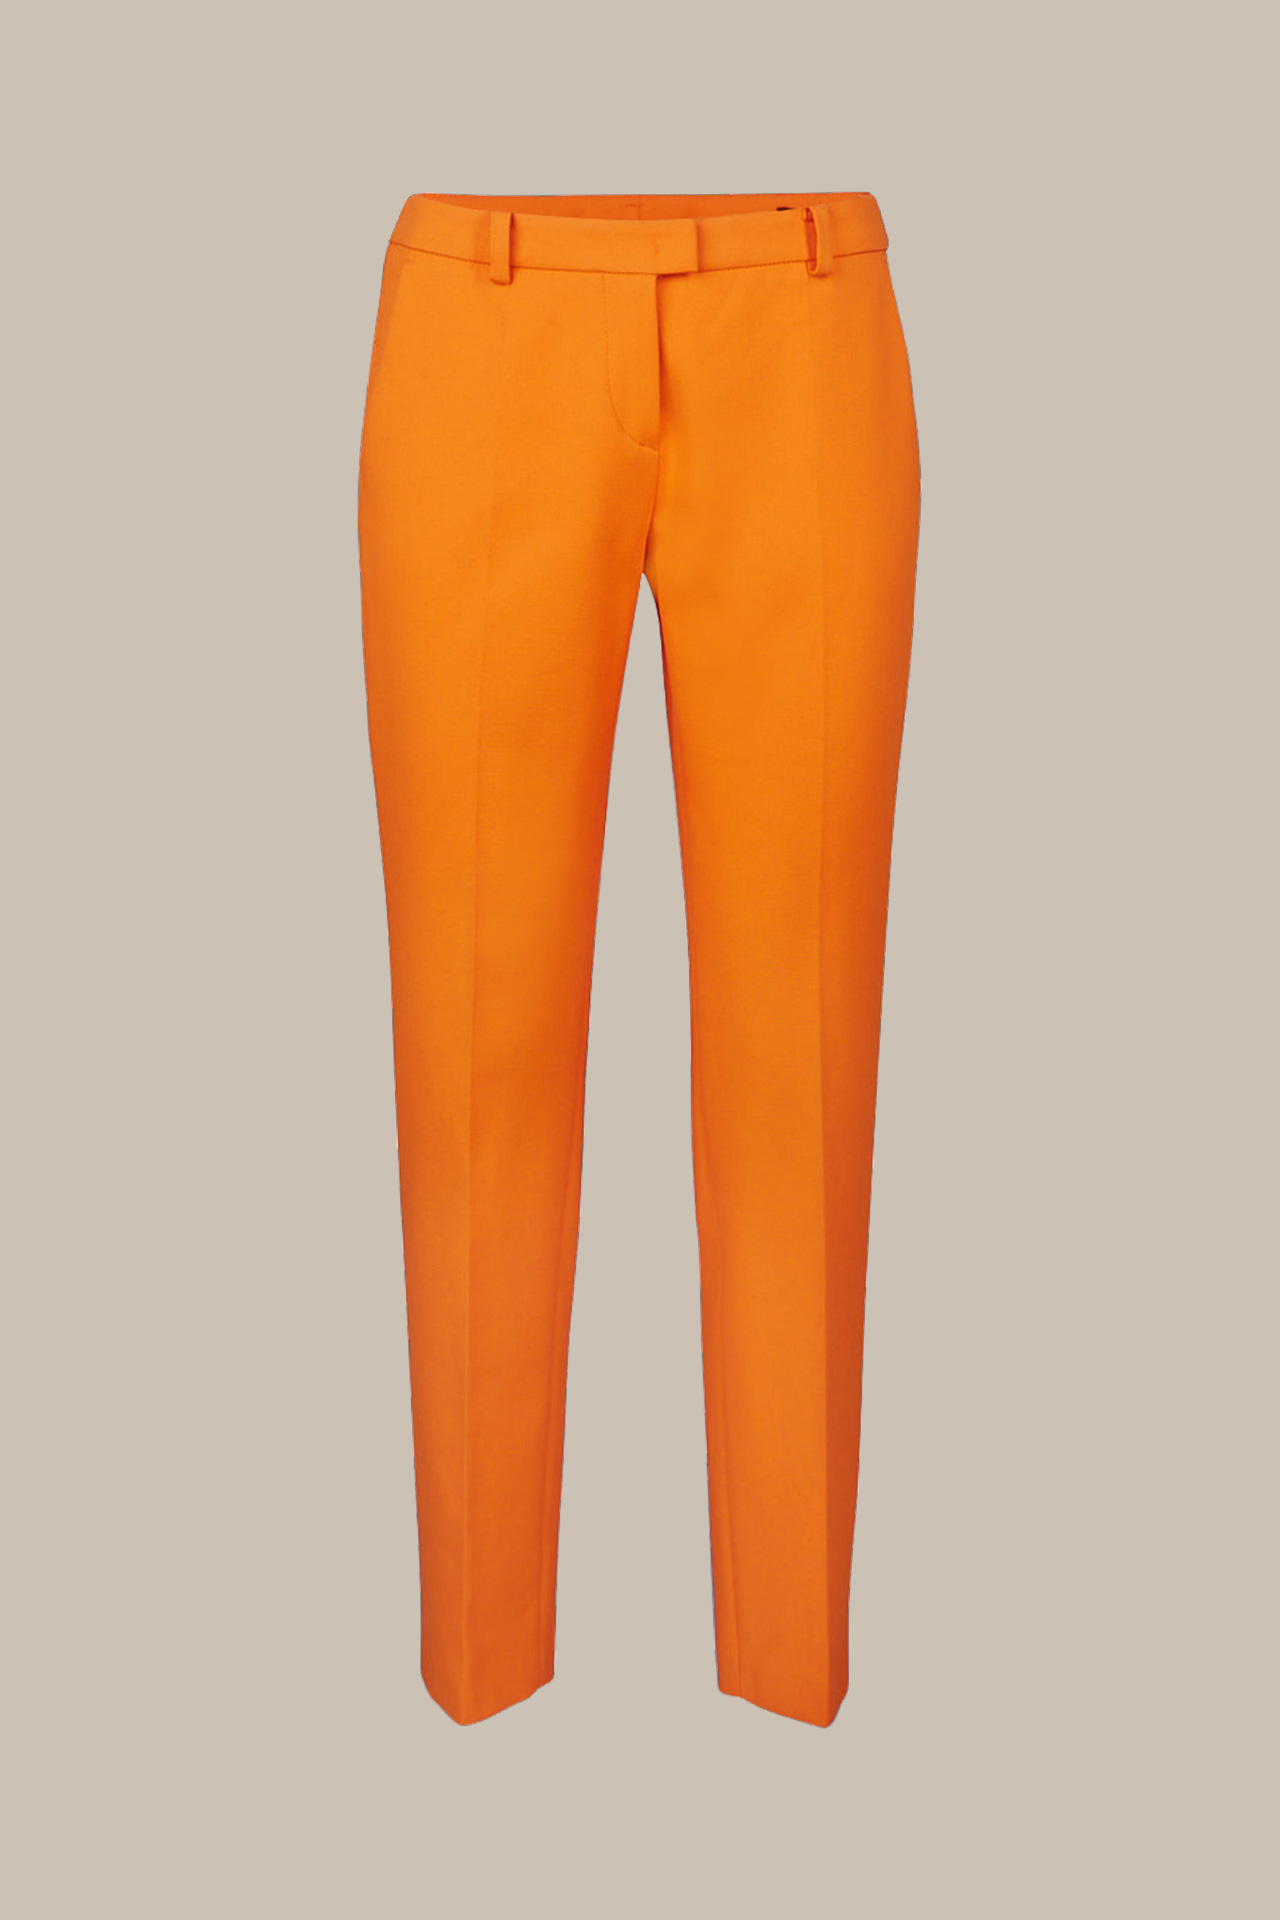 Orange Baumwollstretch-Anzug-Hose windsor. Panamabindung Online-Shop - in in im